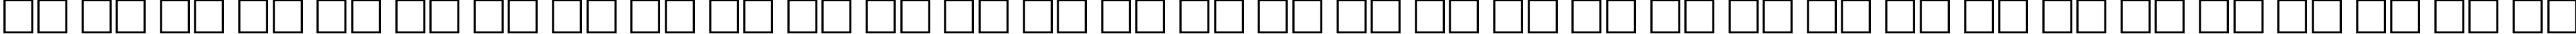 Пример написания русского алфавита шрифтом AGLettericaCompressed Roman